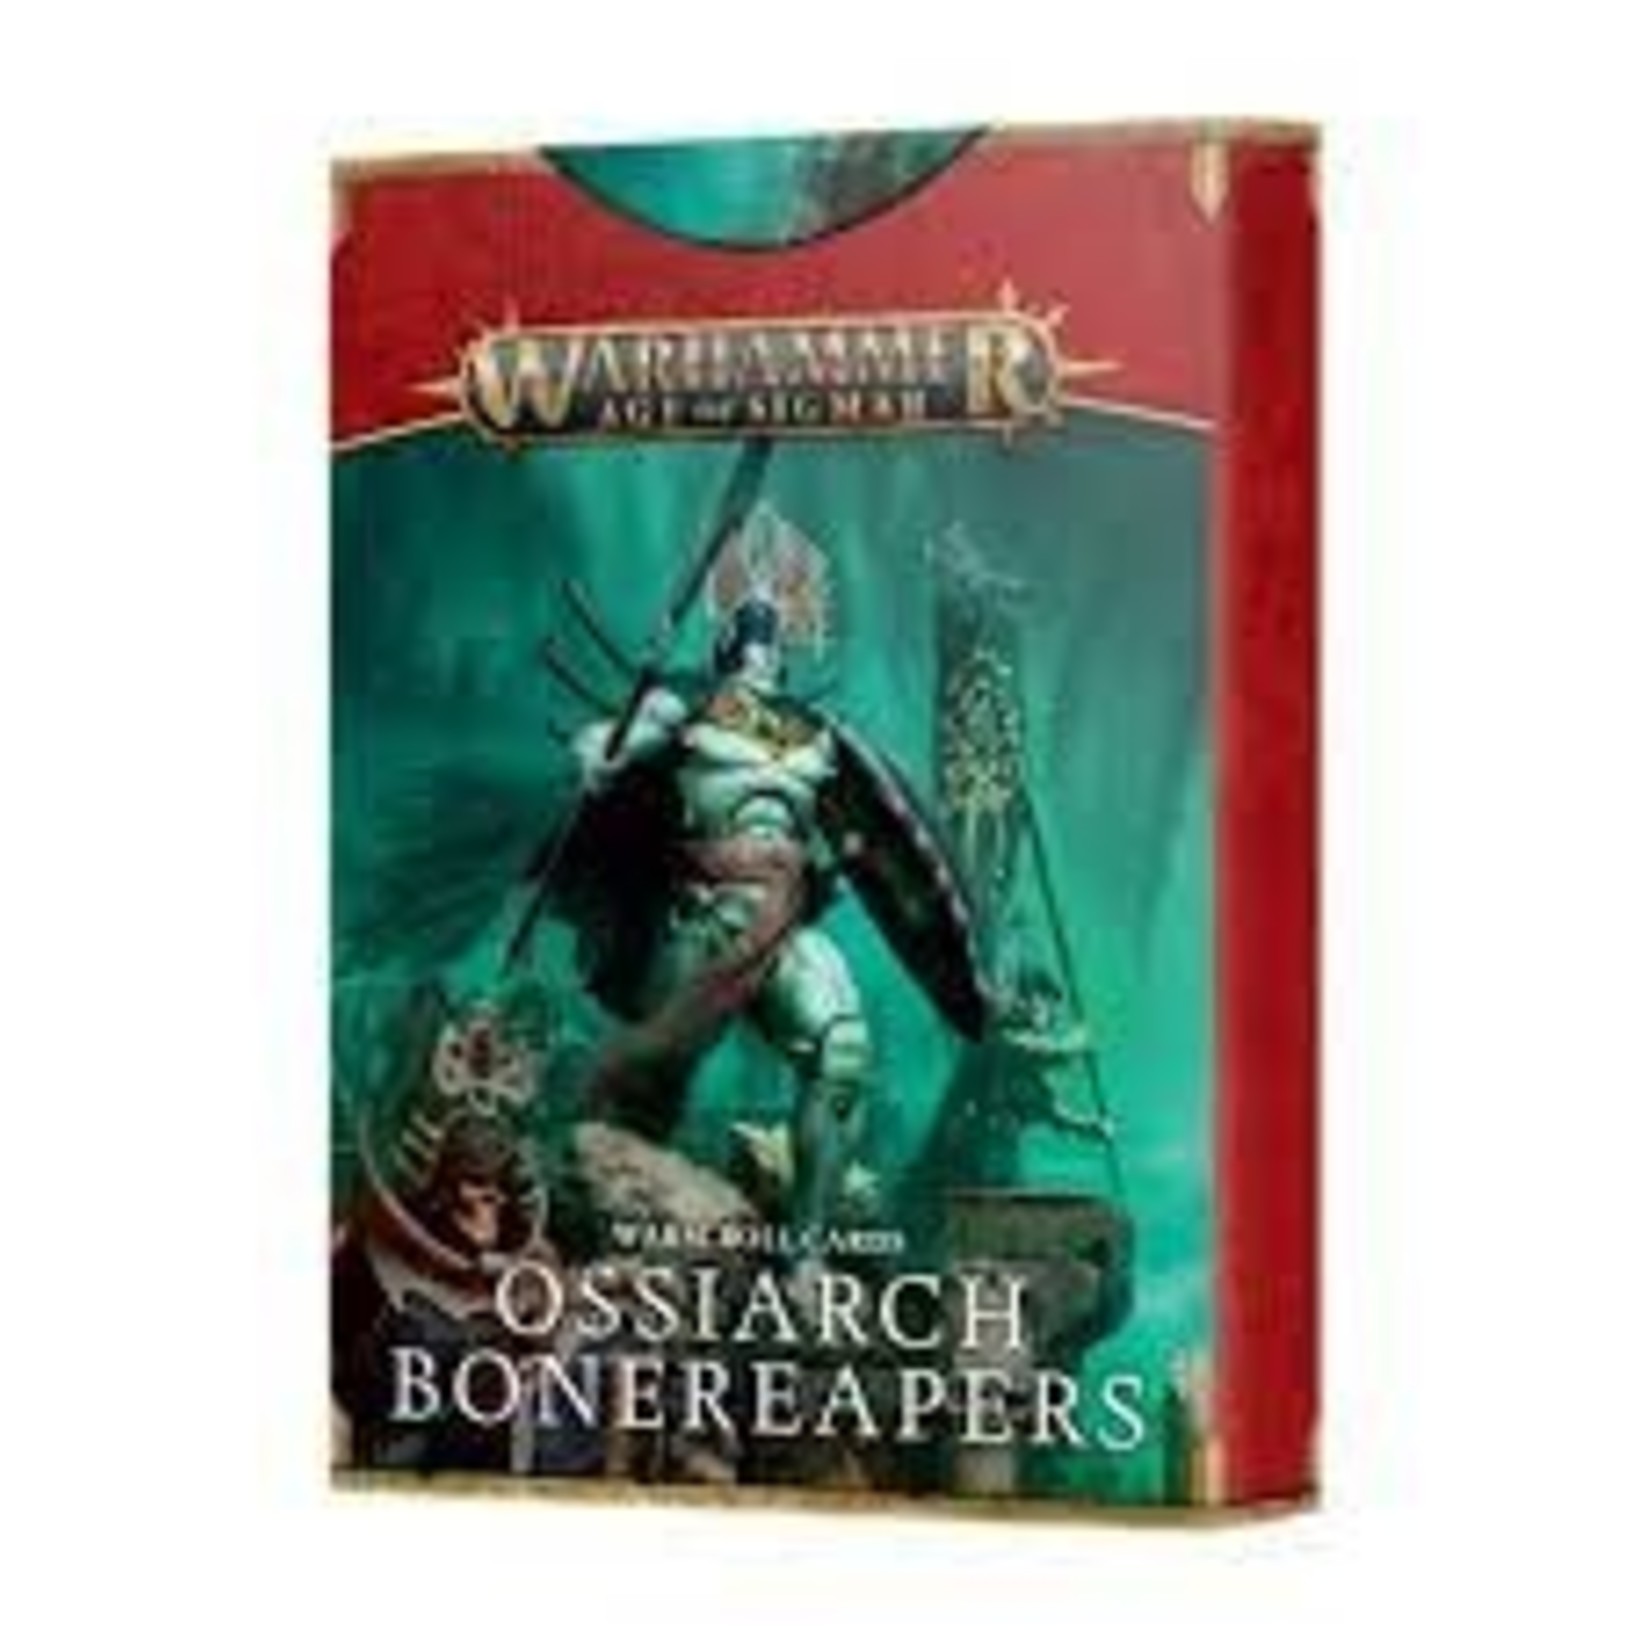 Games Workshop Warscroll Cards: Ossiarch Bonereapers